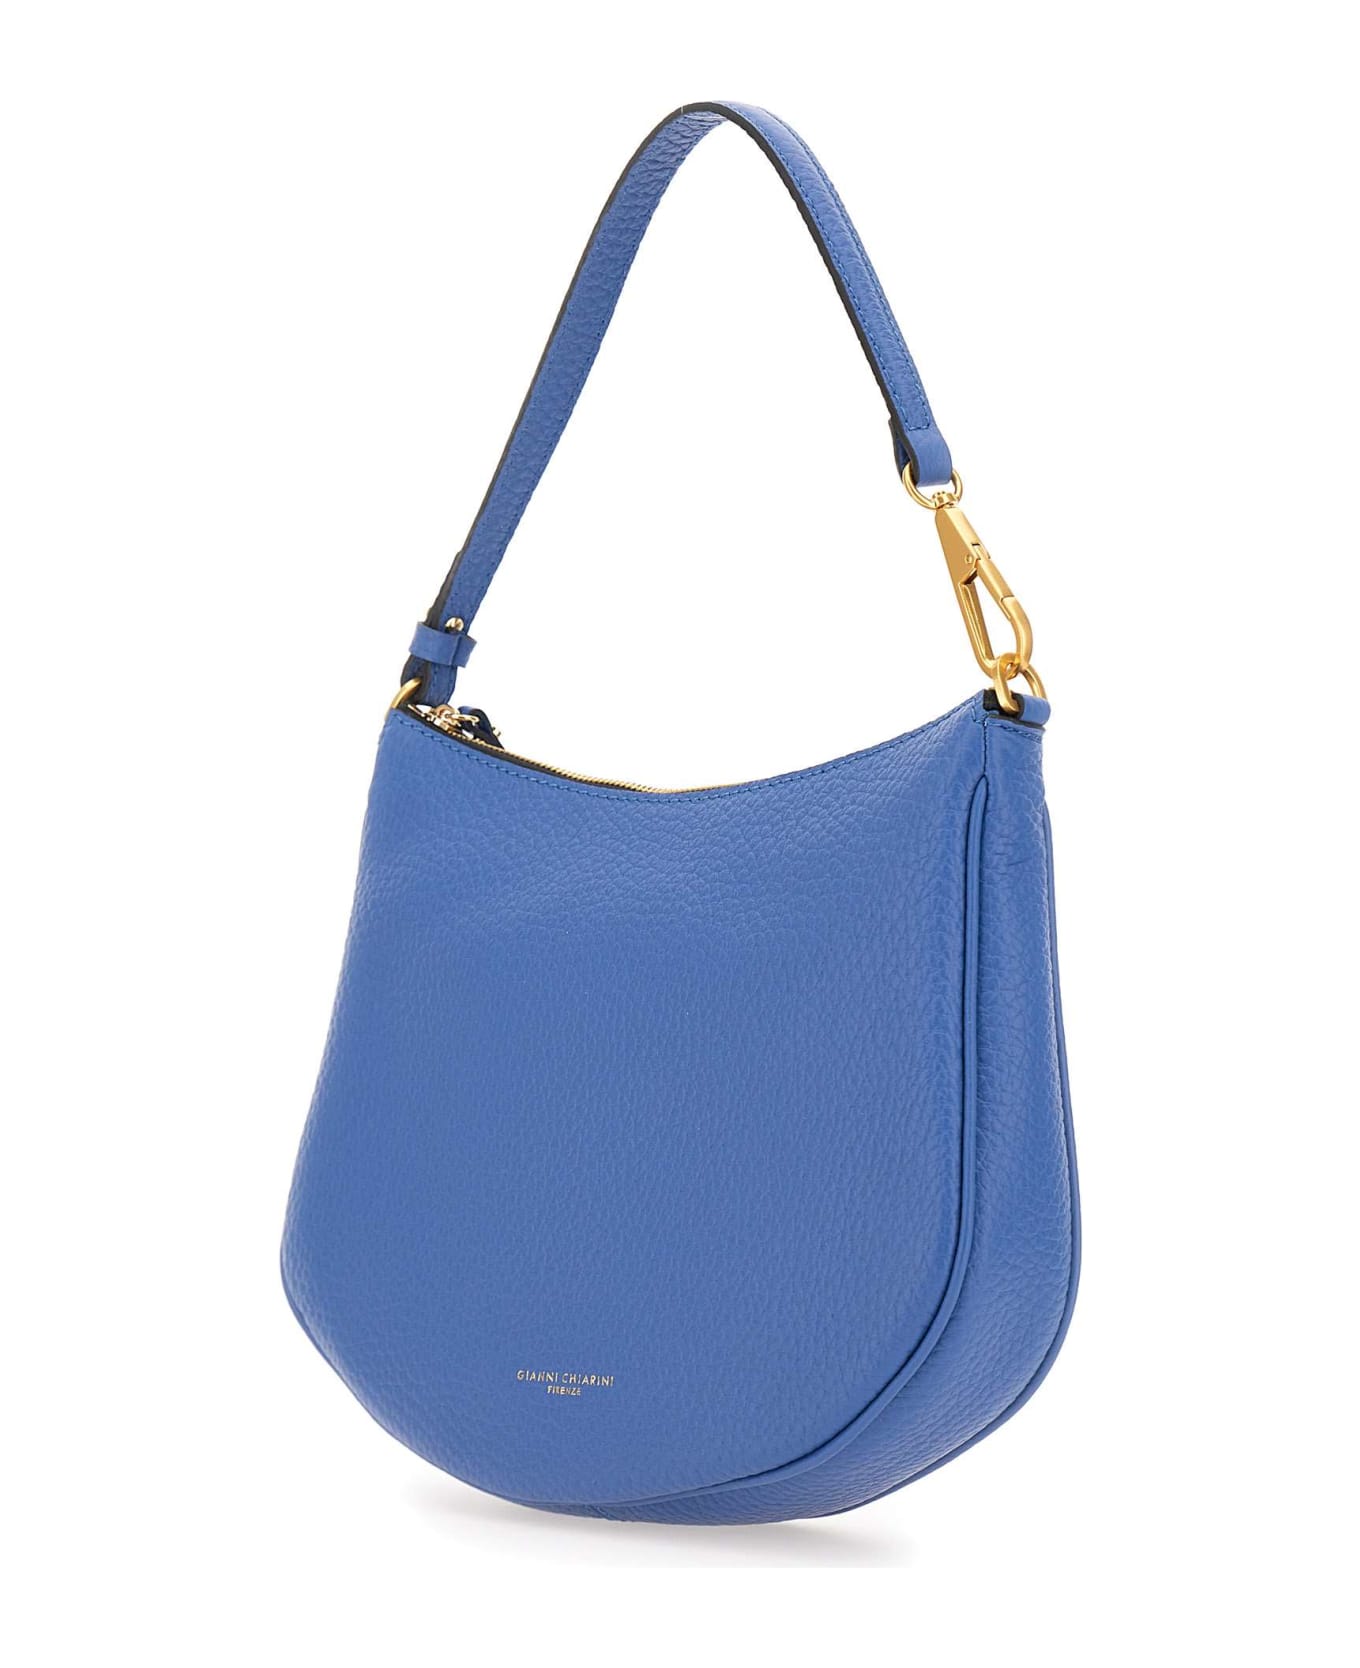 Gianni Chiarini "brooke" Leather Bag - BLUE